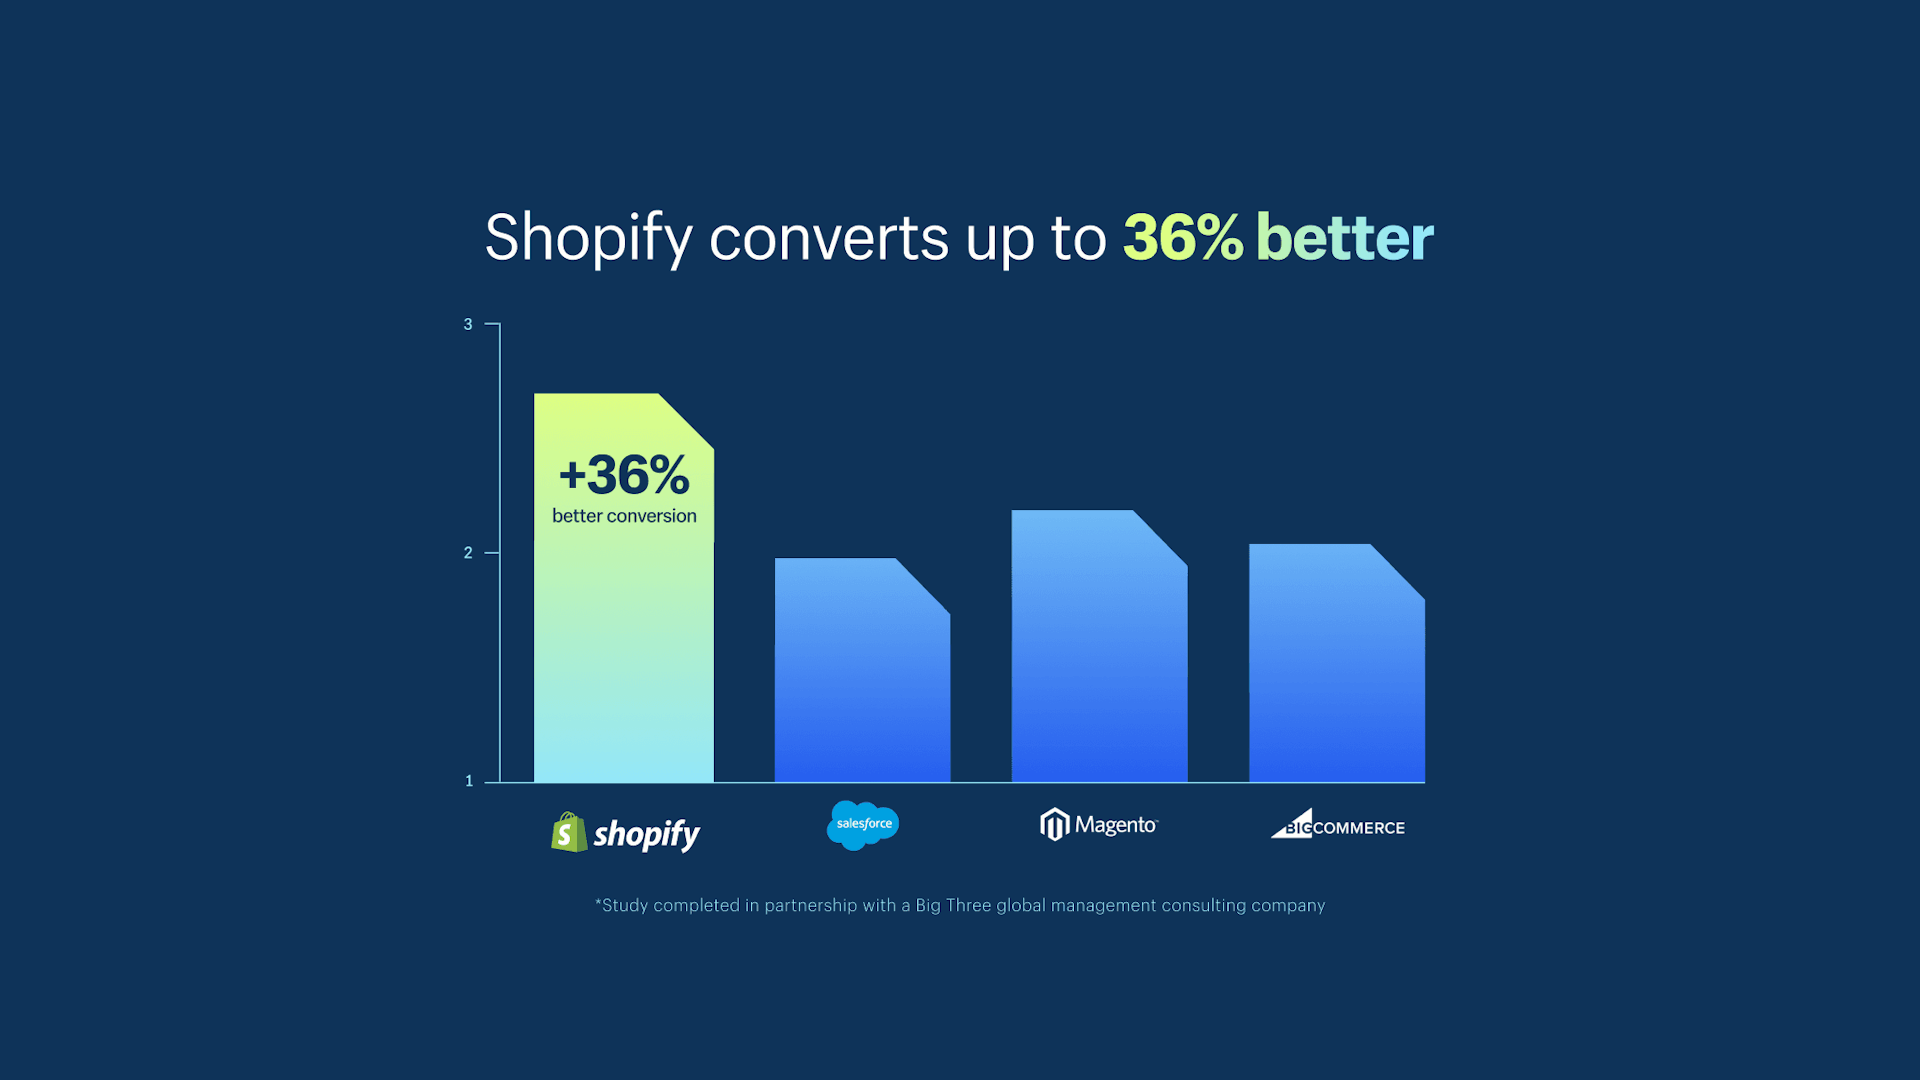 Shopify Checkout conversion rate in comparison